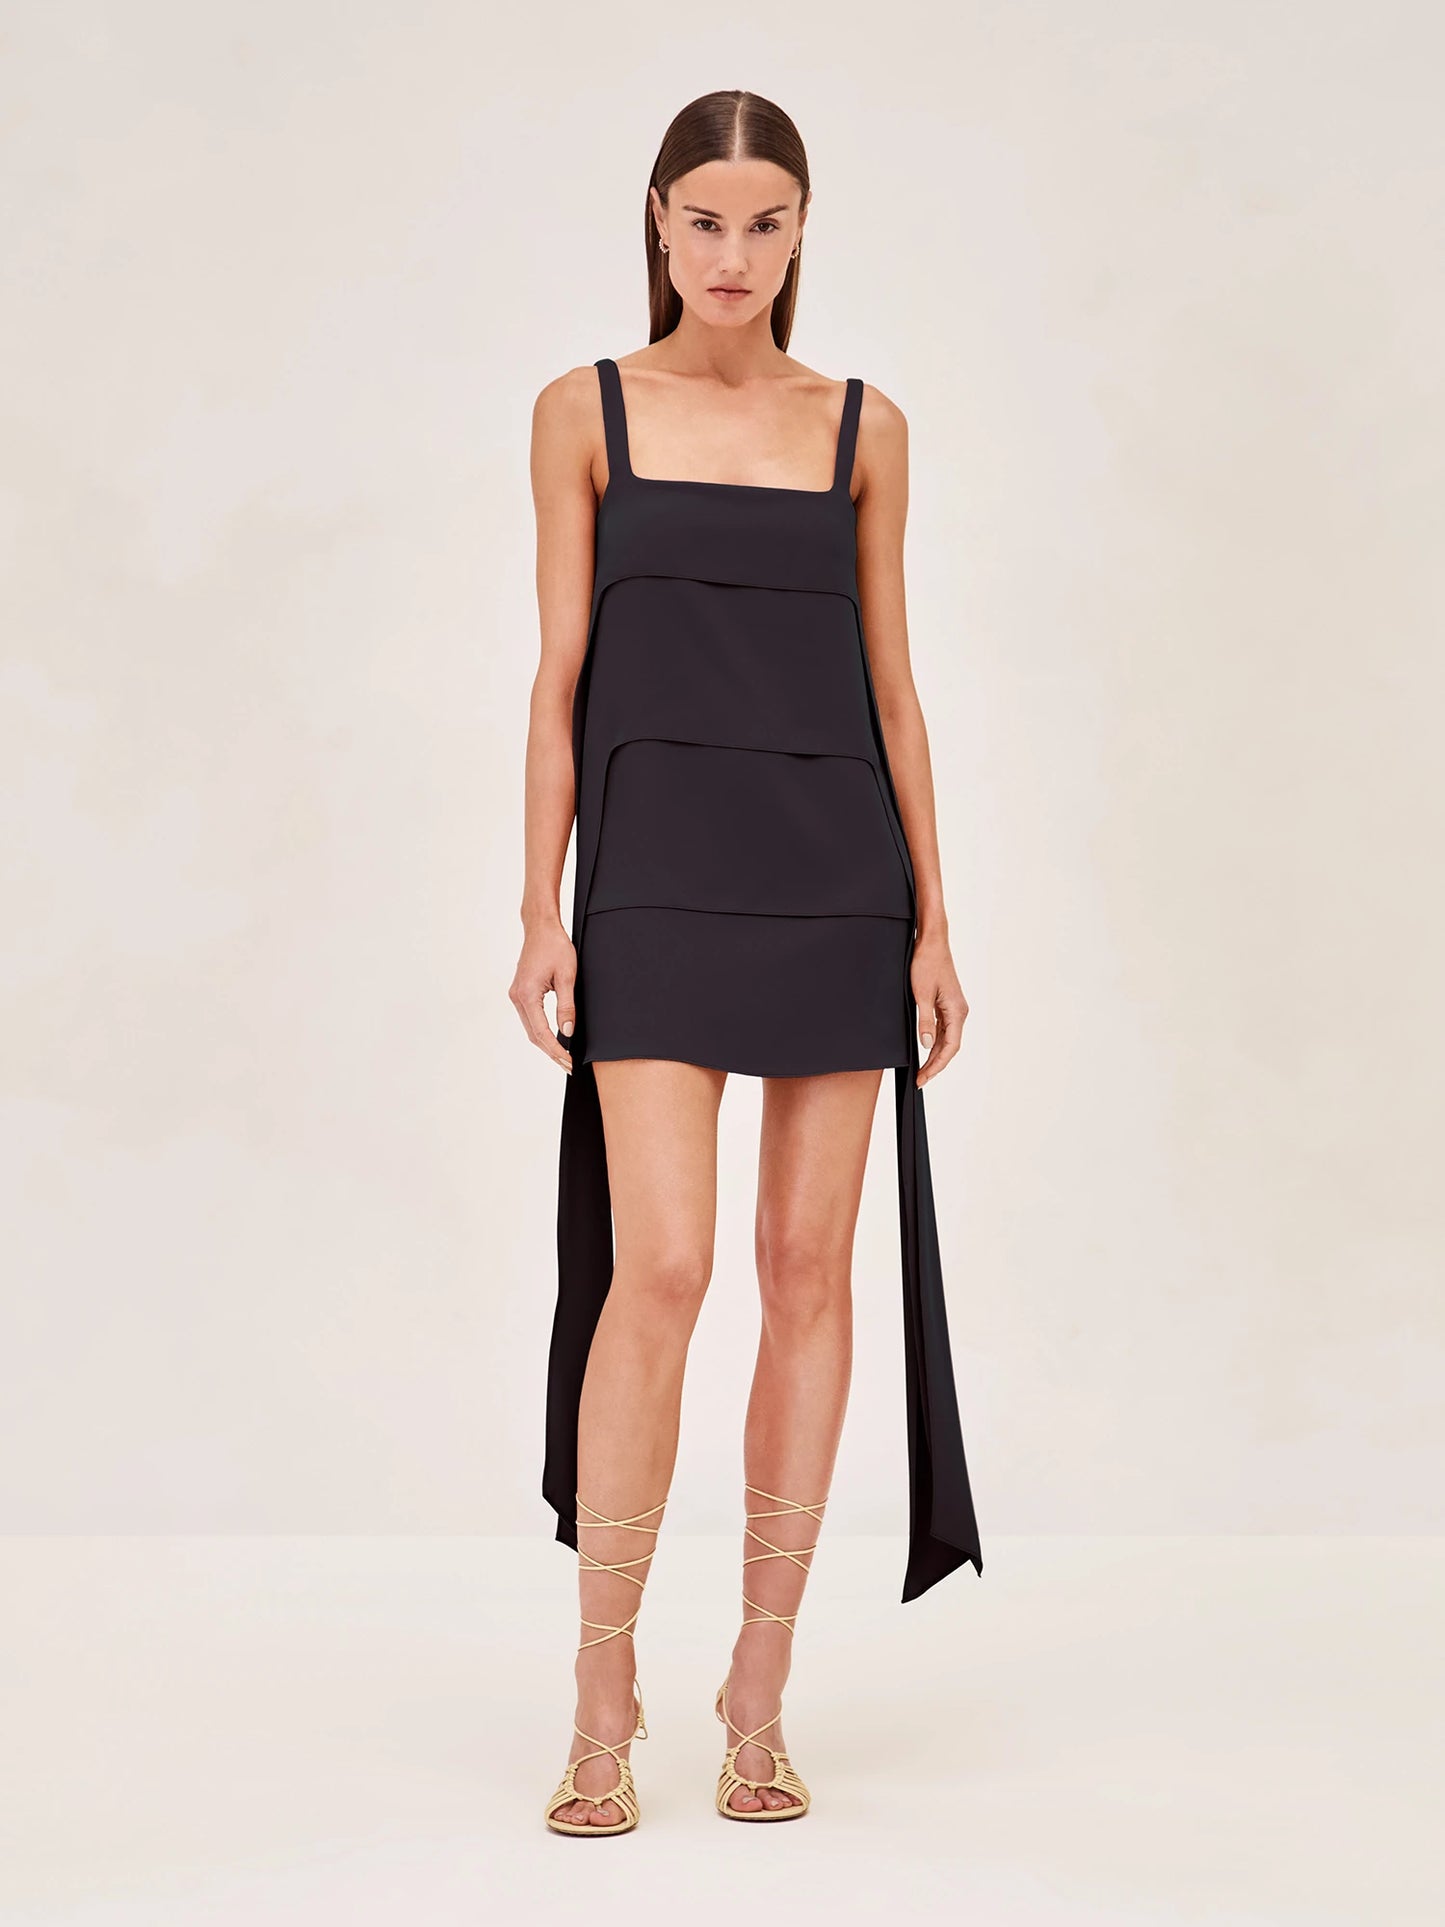 Alexis Hazel sleeveless mini dress in black